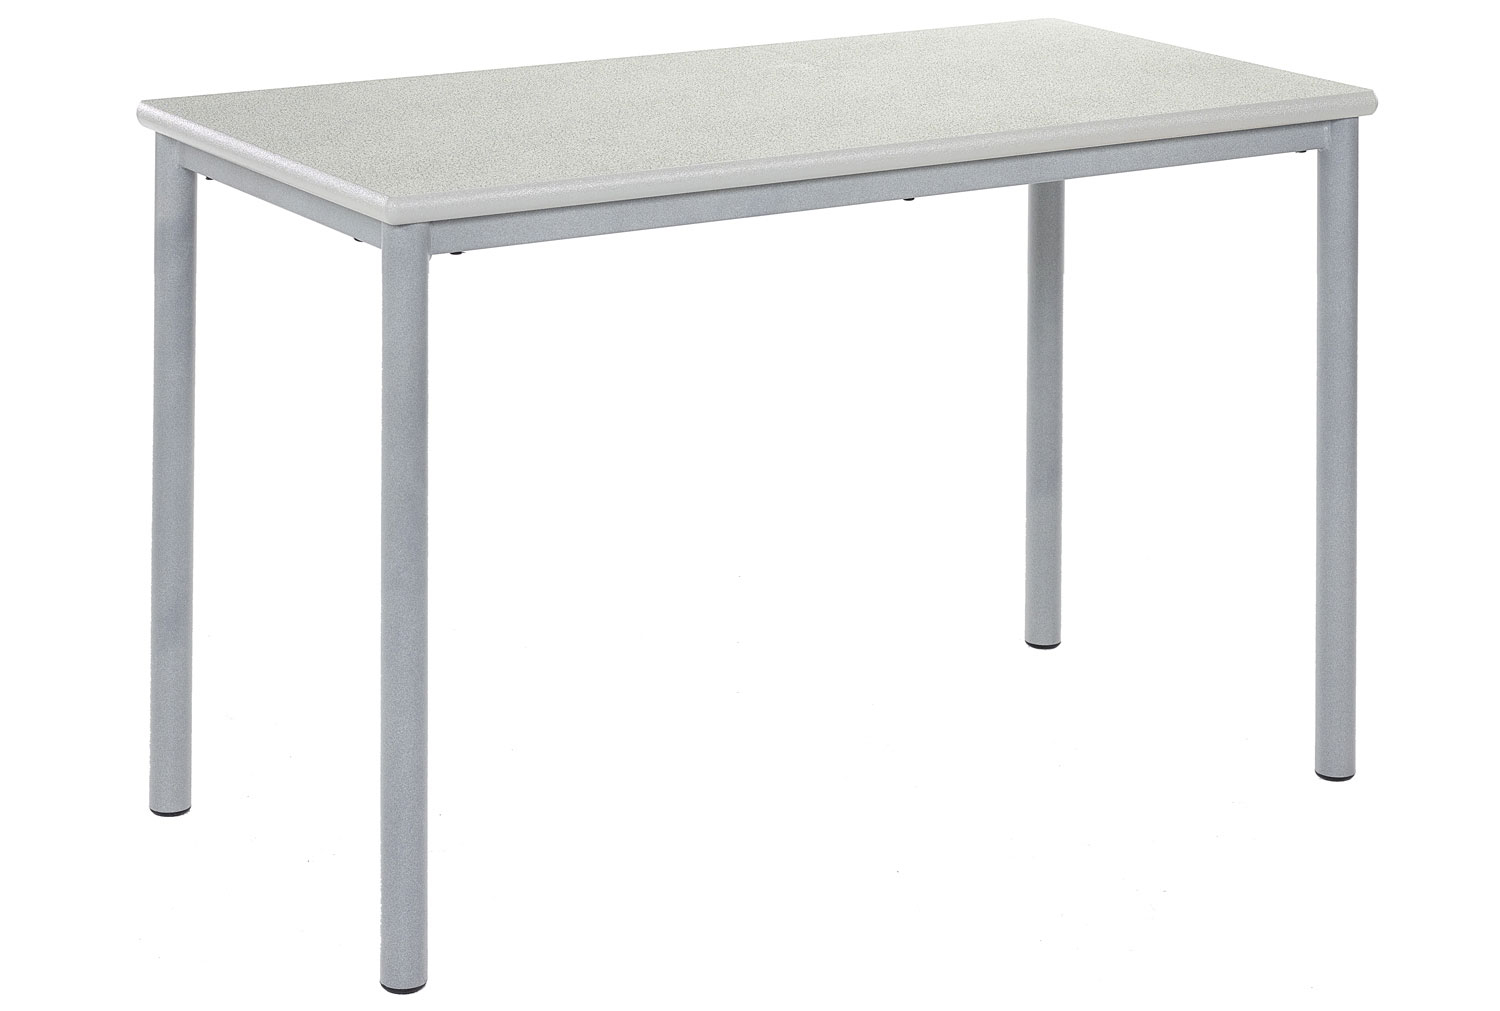 Qty 4 - Gather Rectangular Meeting Tables 120wx75d, Charcoal Frame, Beech Top, PU Charcoal Edge